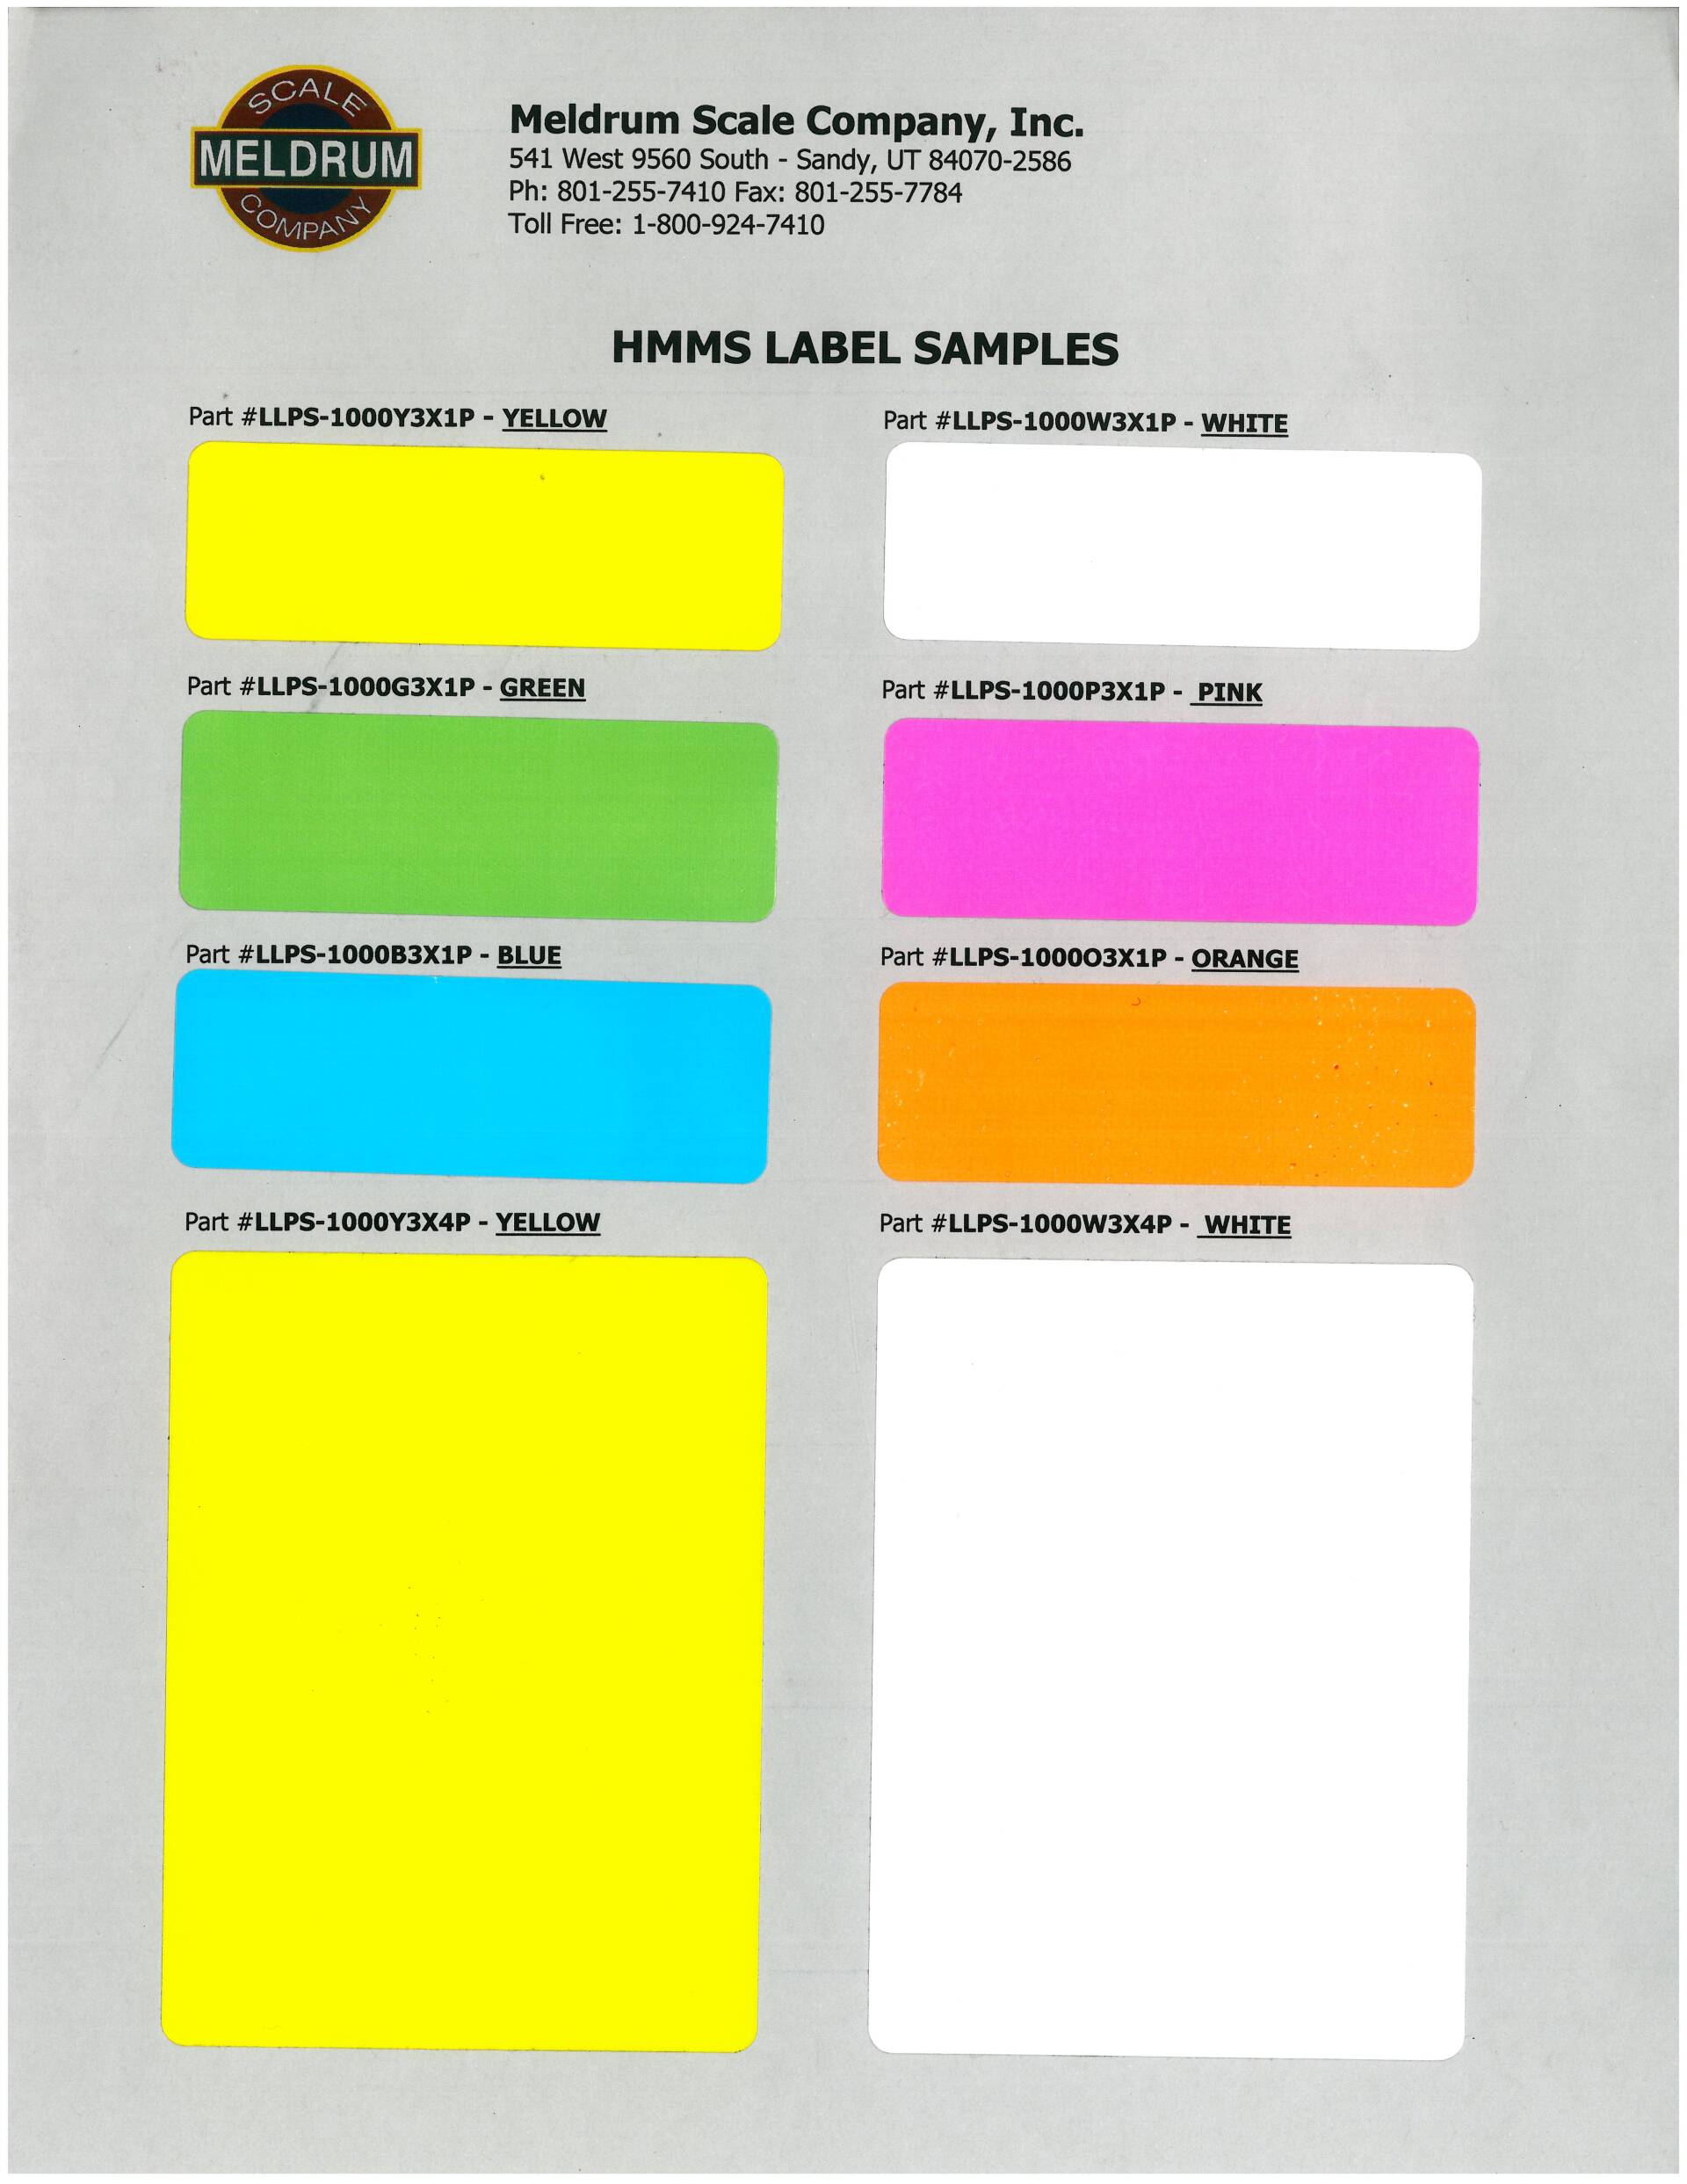 HMMS Label Samples ─ Sandy, UT ─ Meldrum Scale Company